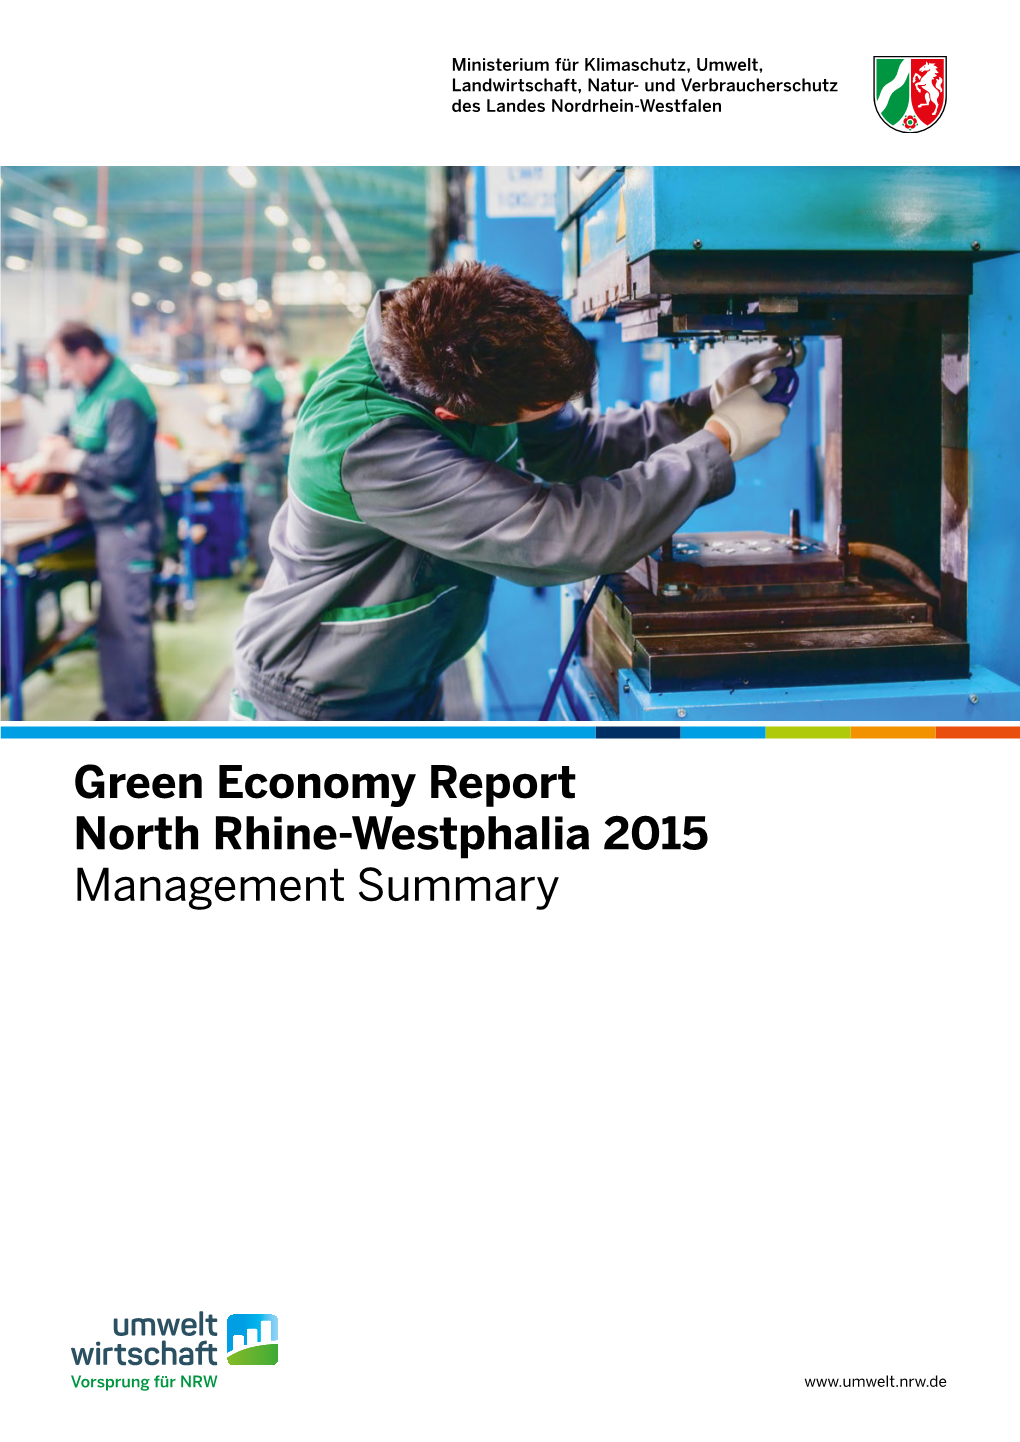 Green Economy Report North Rhine-Westphalia 2015 Management Summary